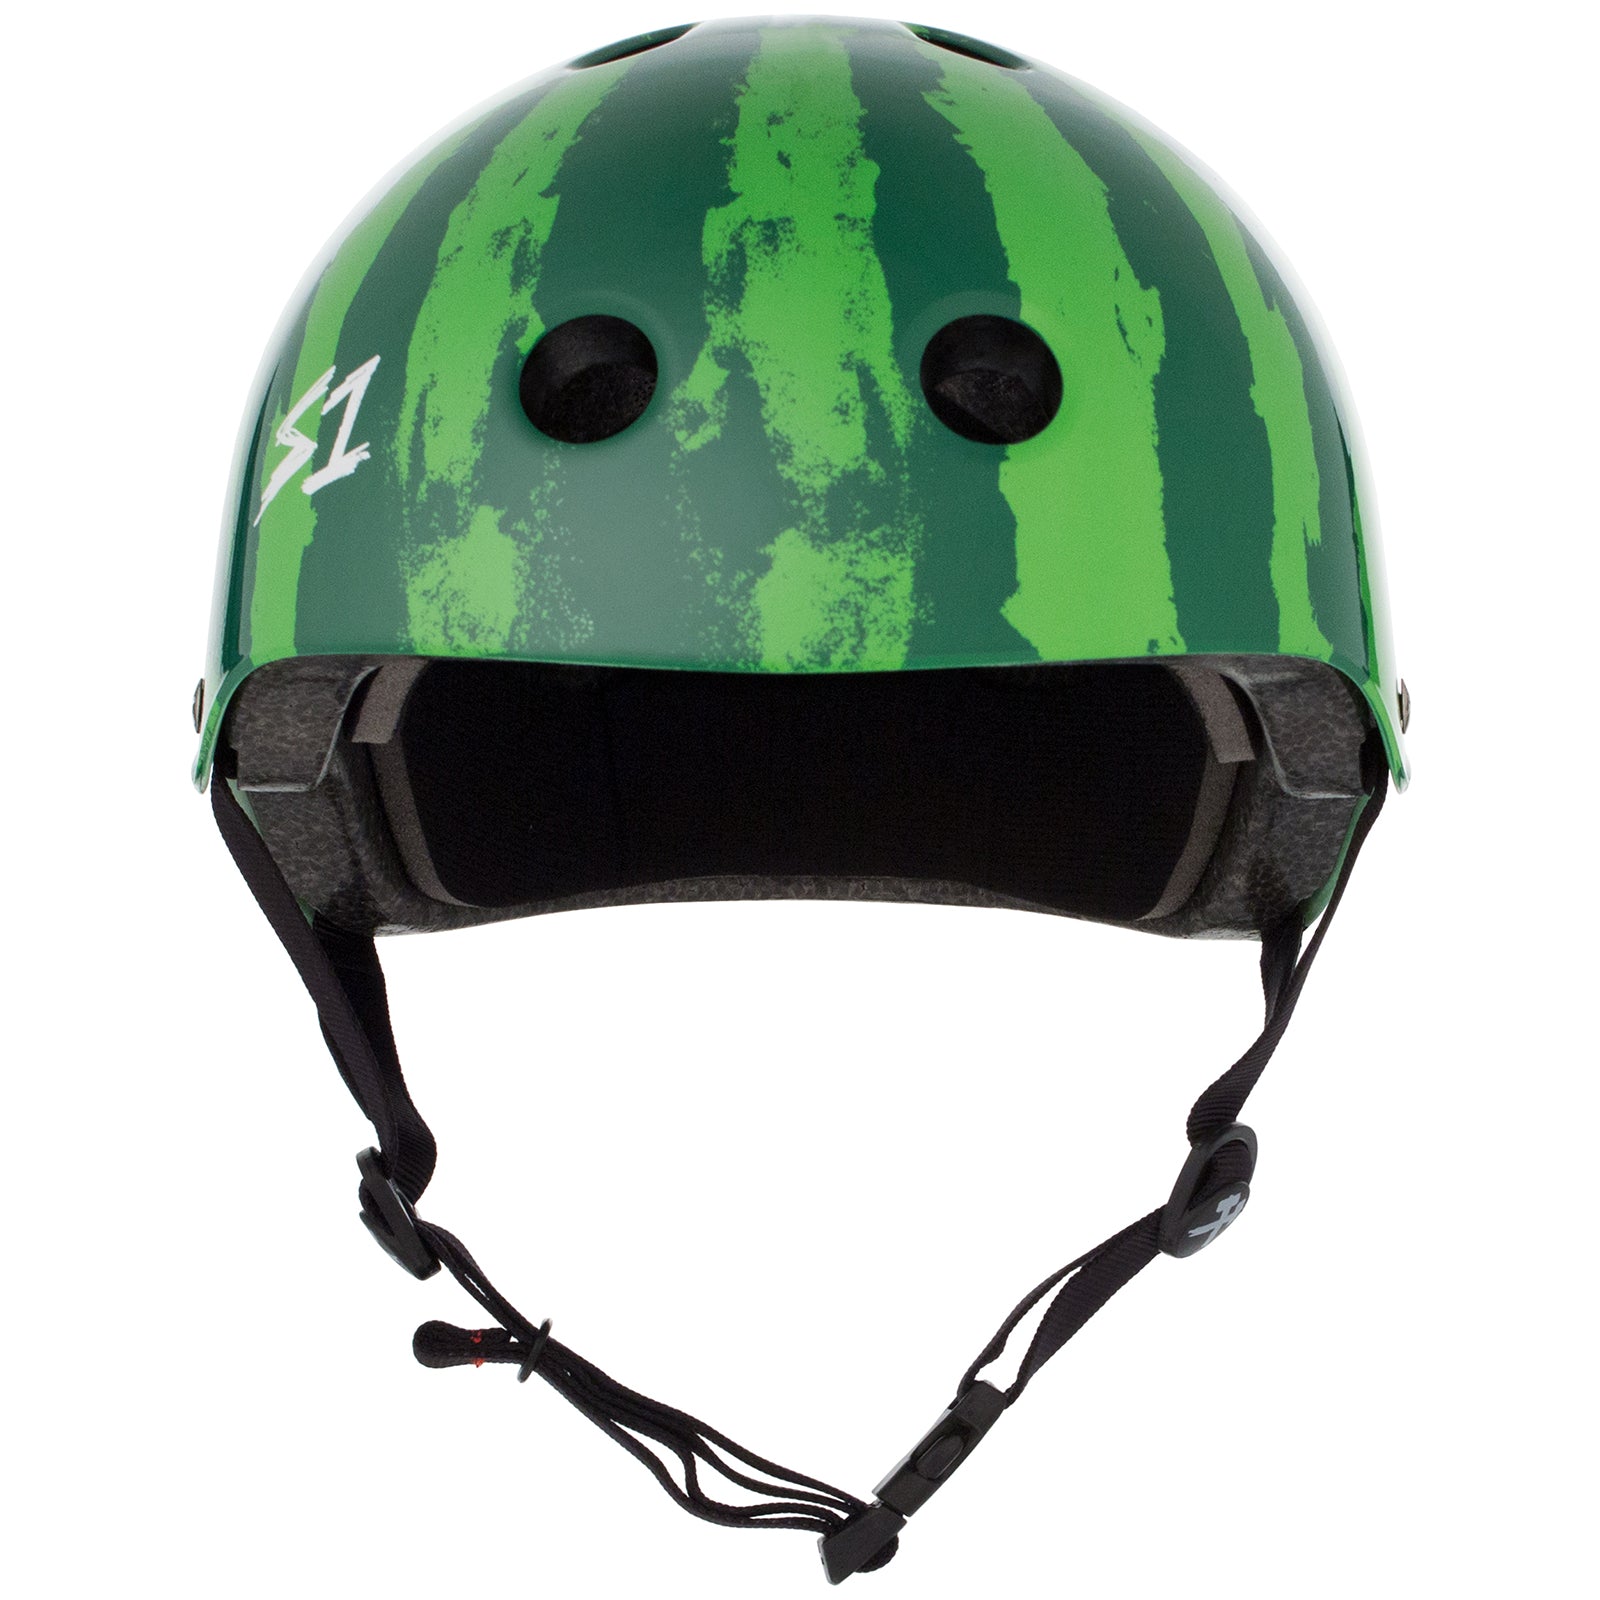 S1 Lifer Helmet - Watermelon Helmet (Watermelon)